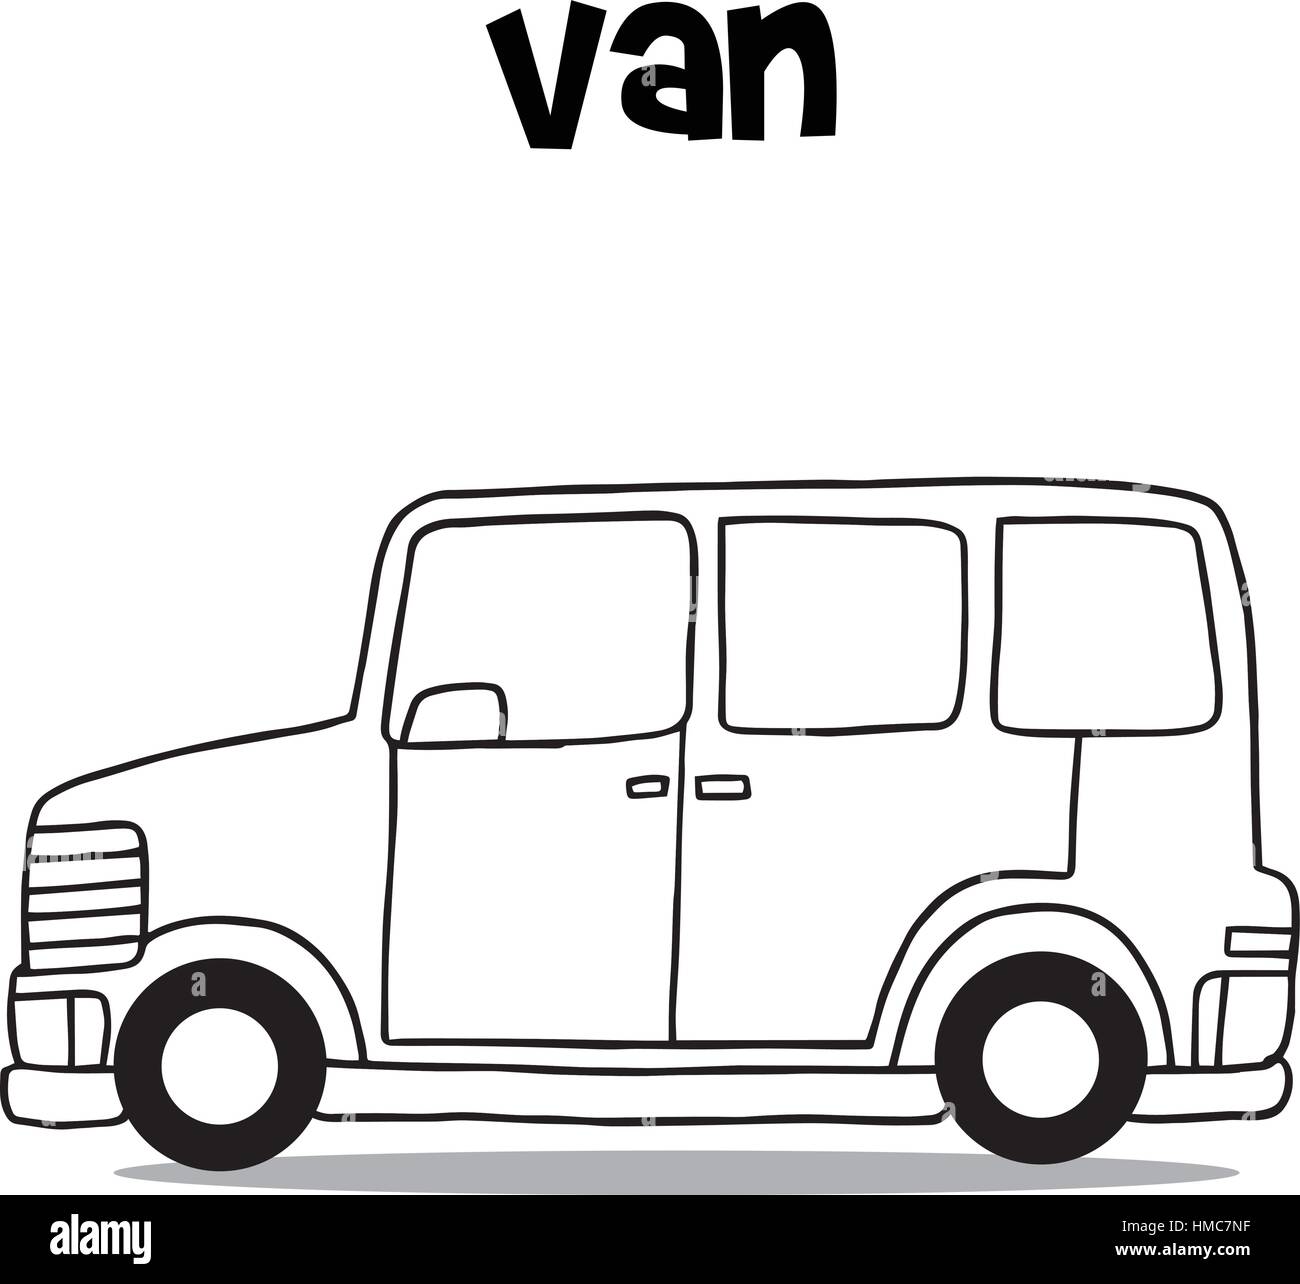 VAN Drawing  How To Draw a Van Easy Trick  YouTube